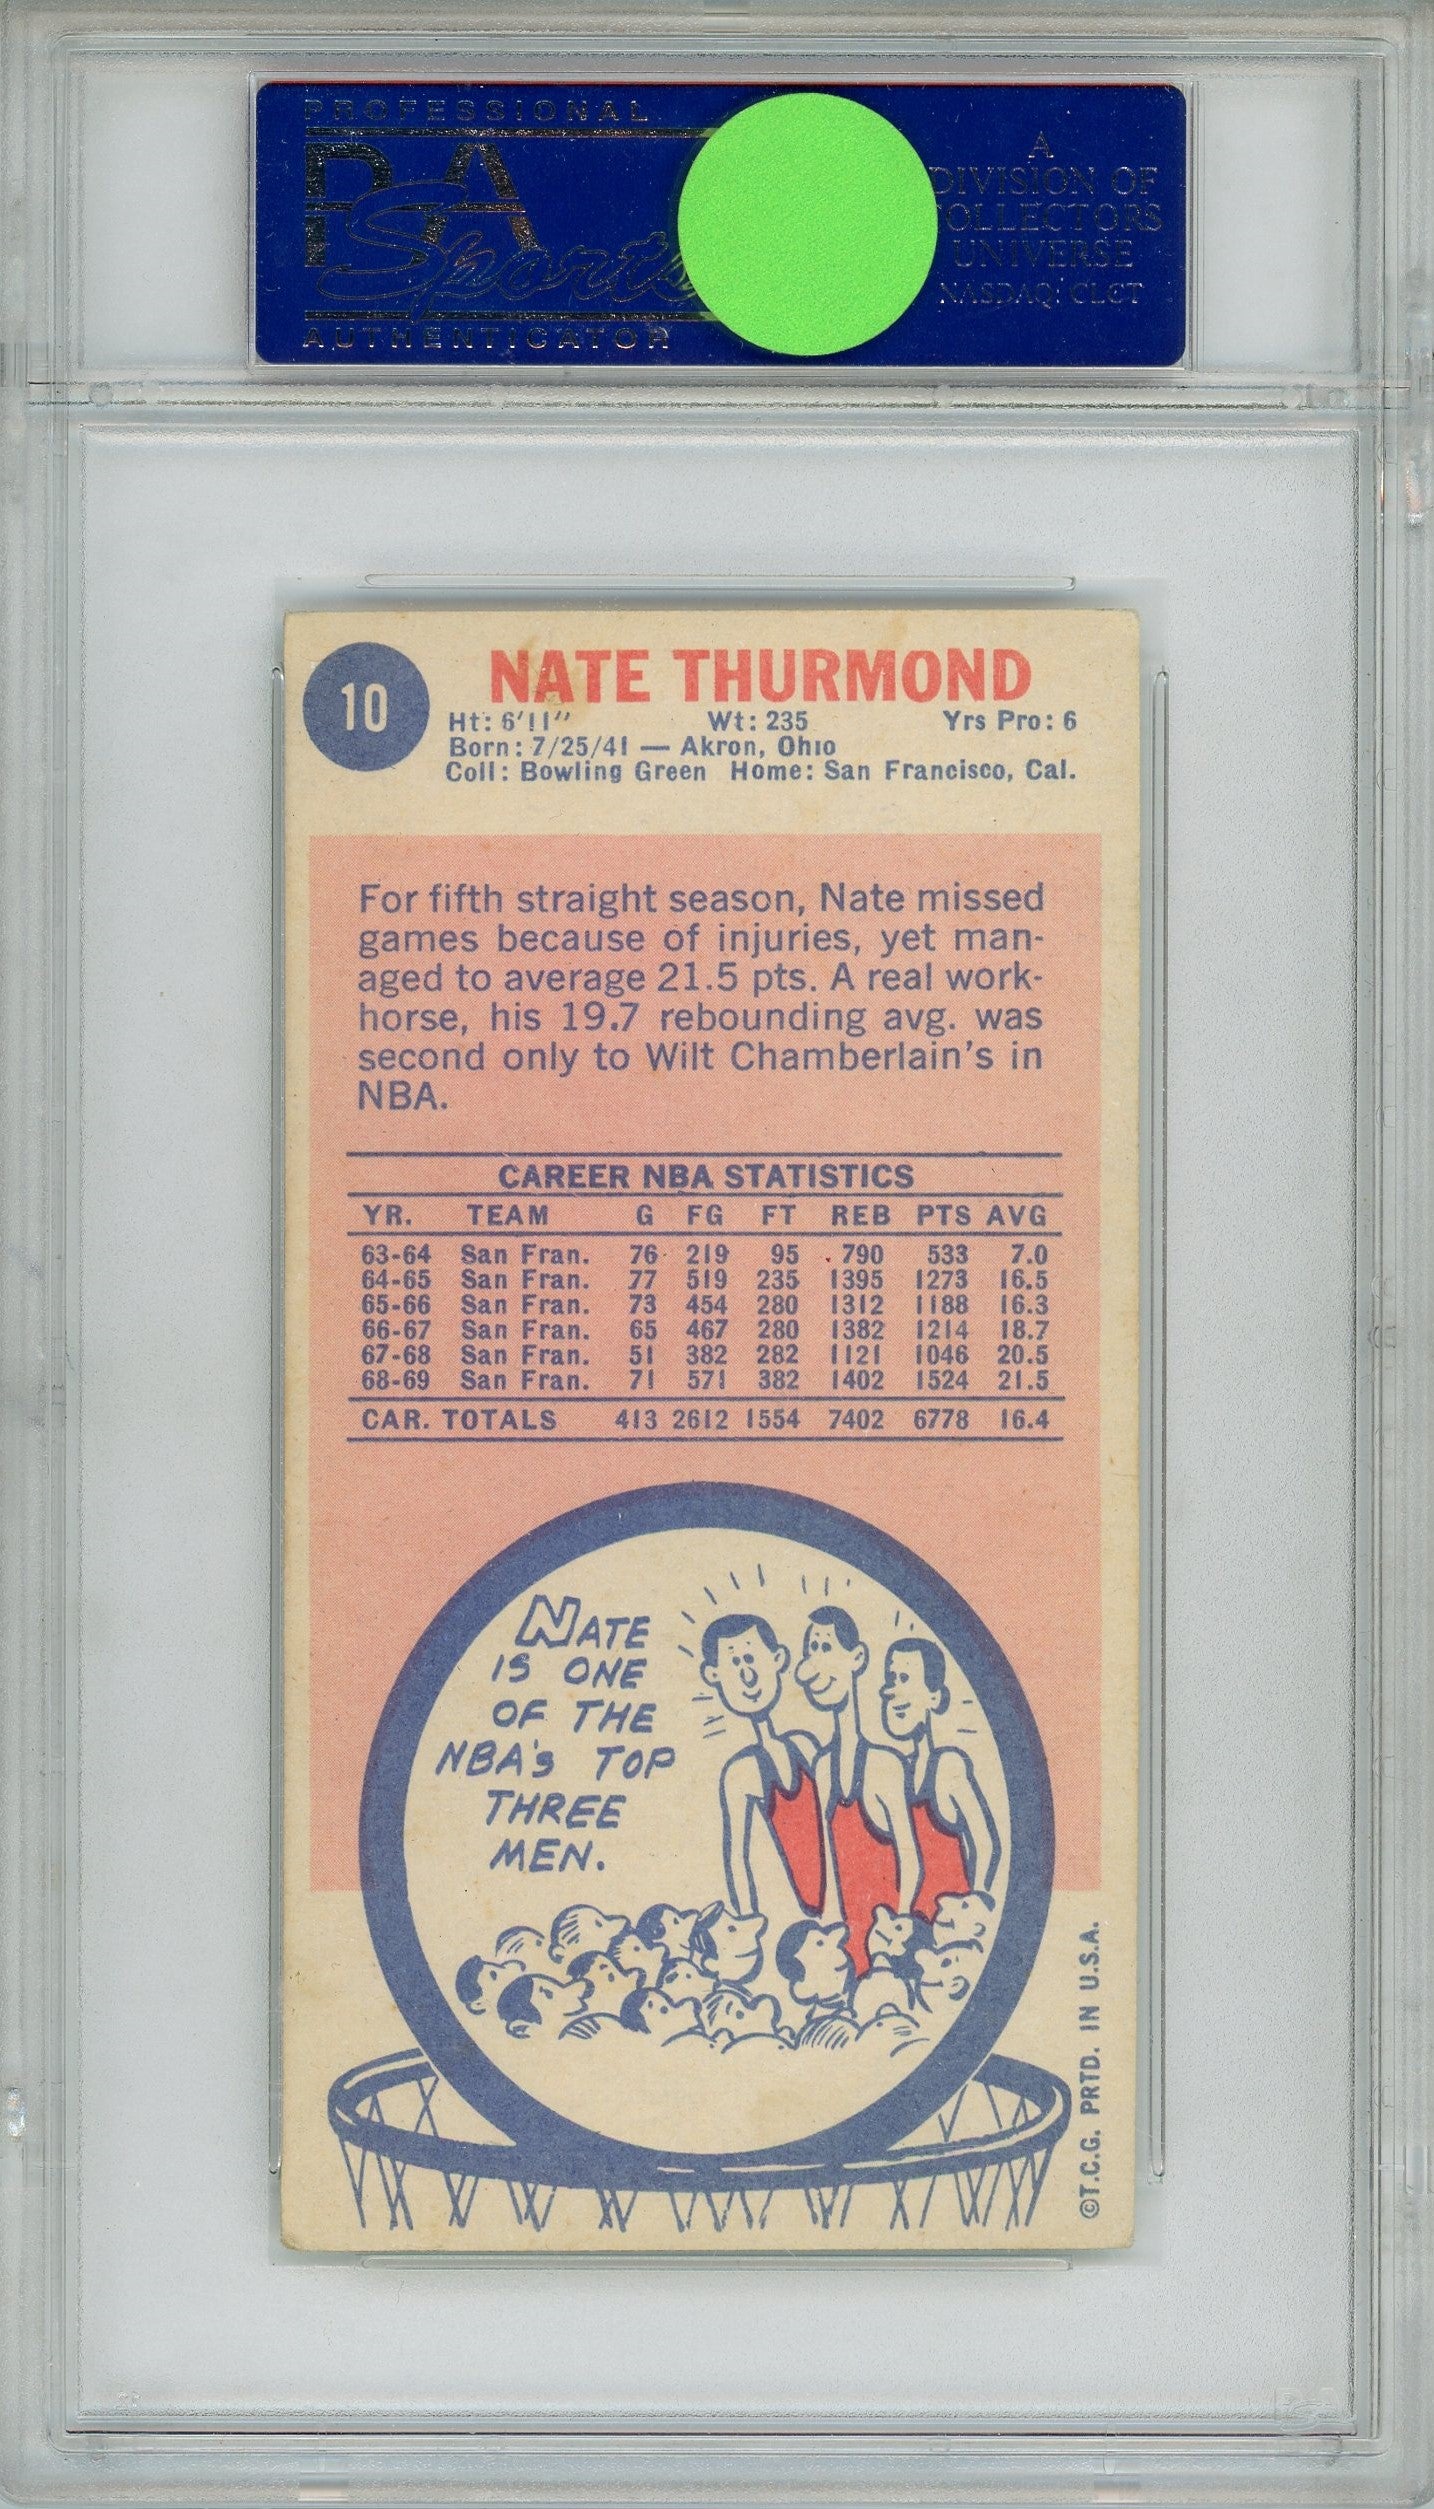 1969 TOPPS NATE THURMOND AUTO ROOKIE CARD RC PSA DNA (1897)